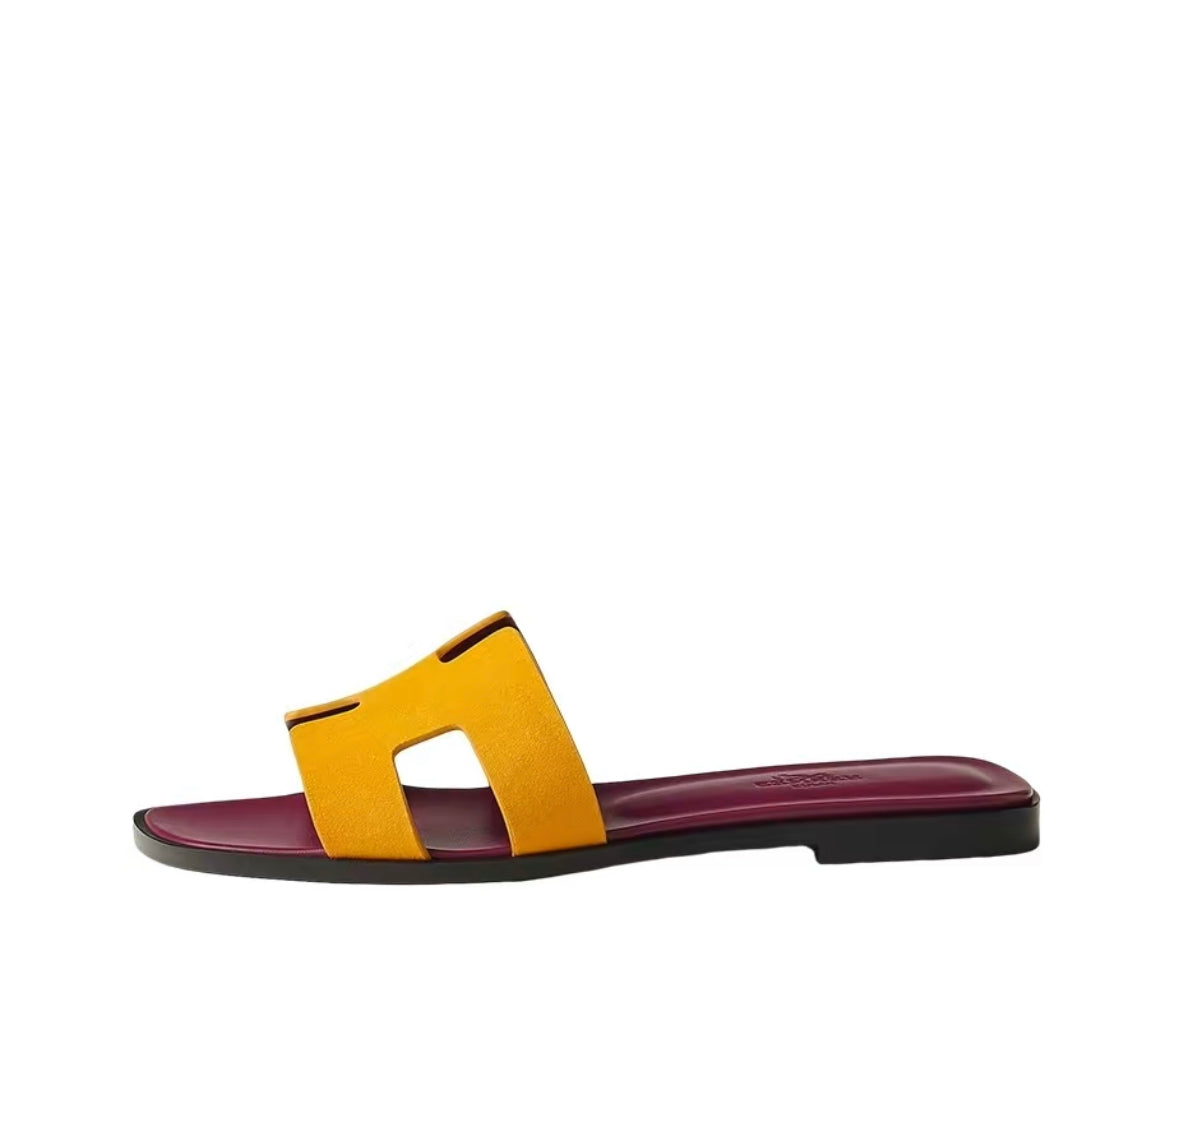 Hermes Oran Sandals “Maroon/Yellow”